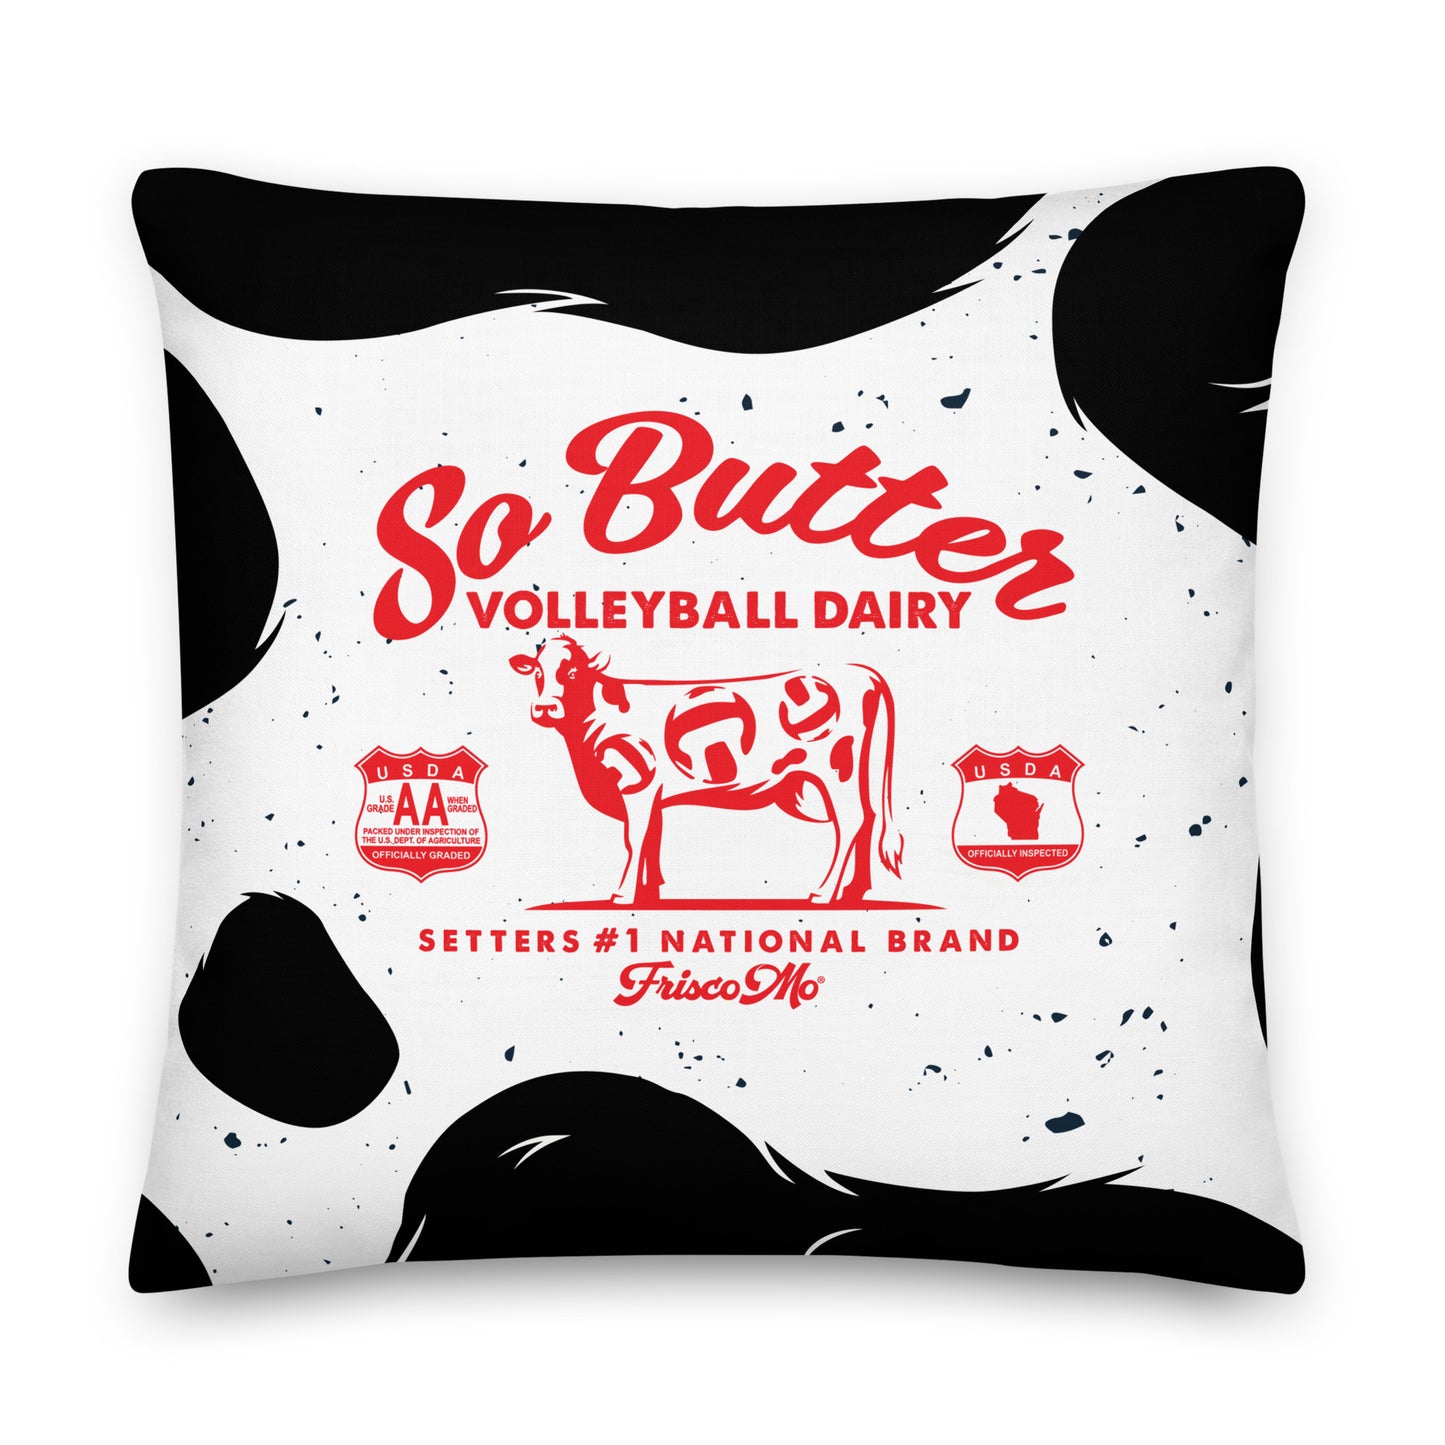 So Butter Dairy Pillow